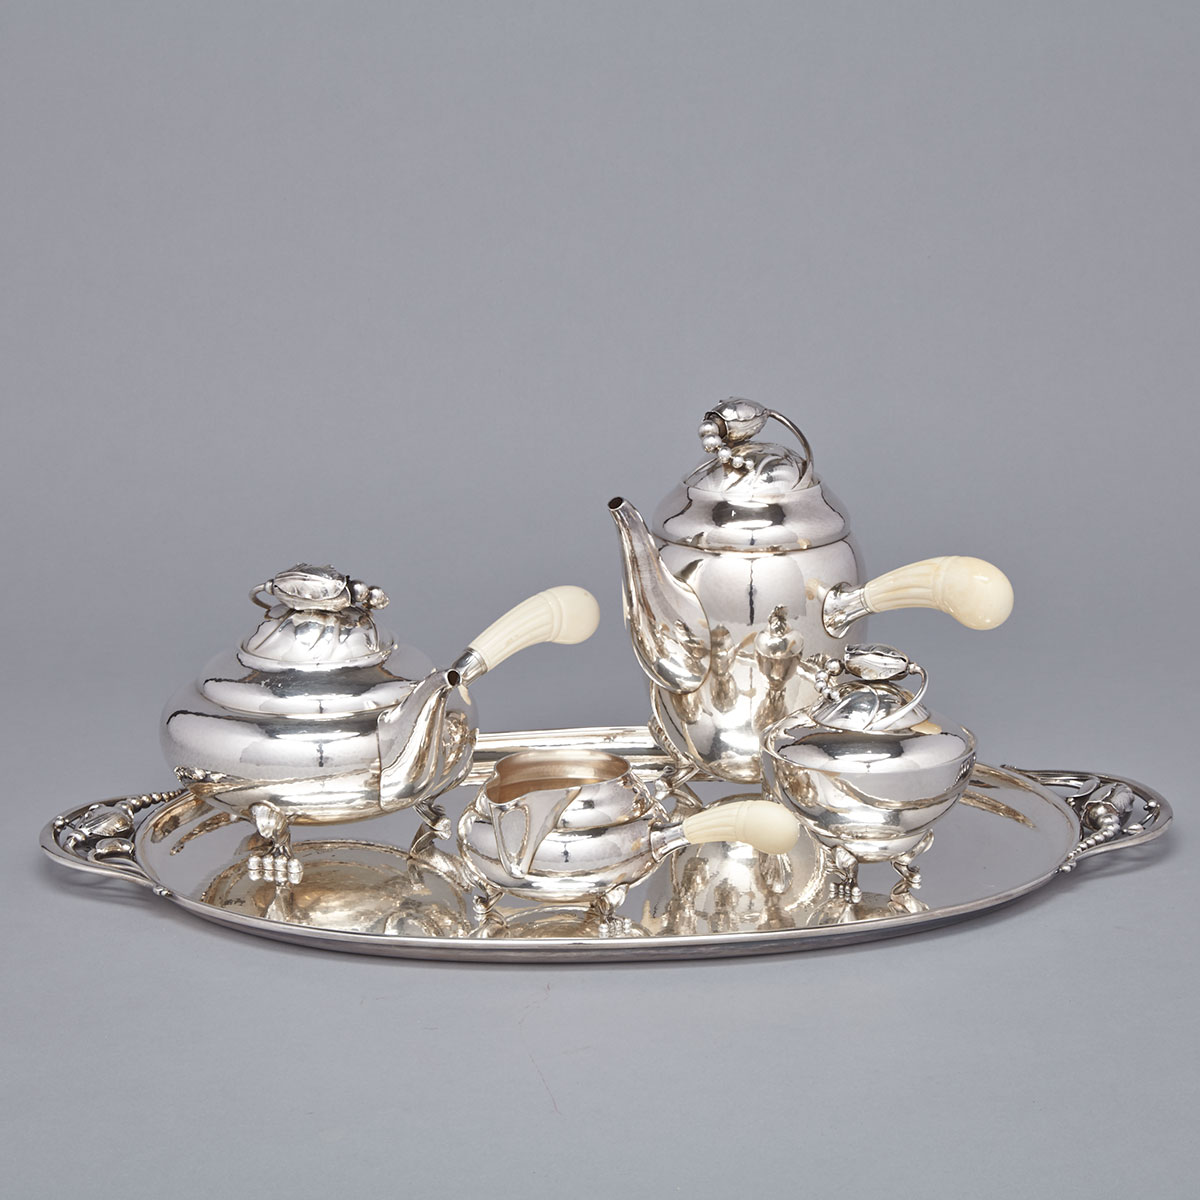 Danish Silver ‘Blossom’ Pattern Tea and Coffee Service with Tray, #2D and #2E, Georg Jensen, Copenhagen, 20th century